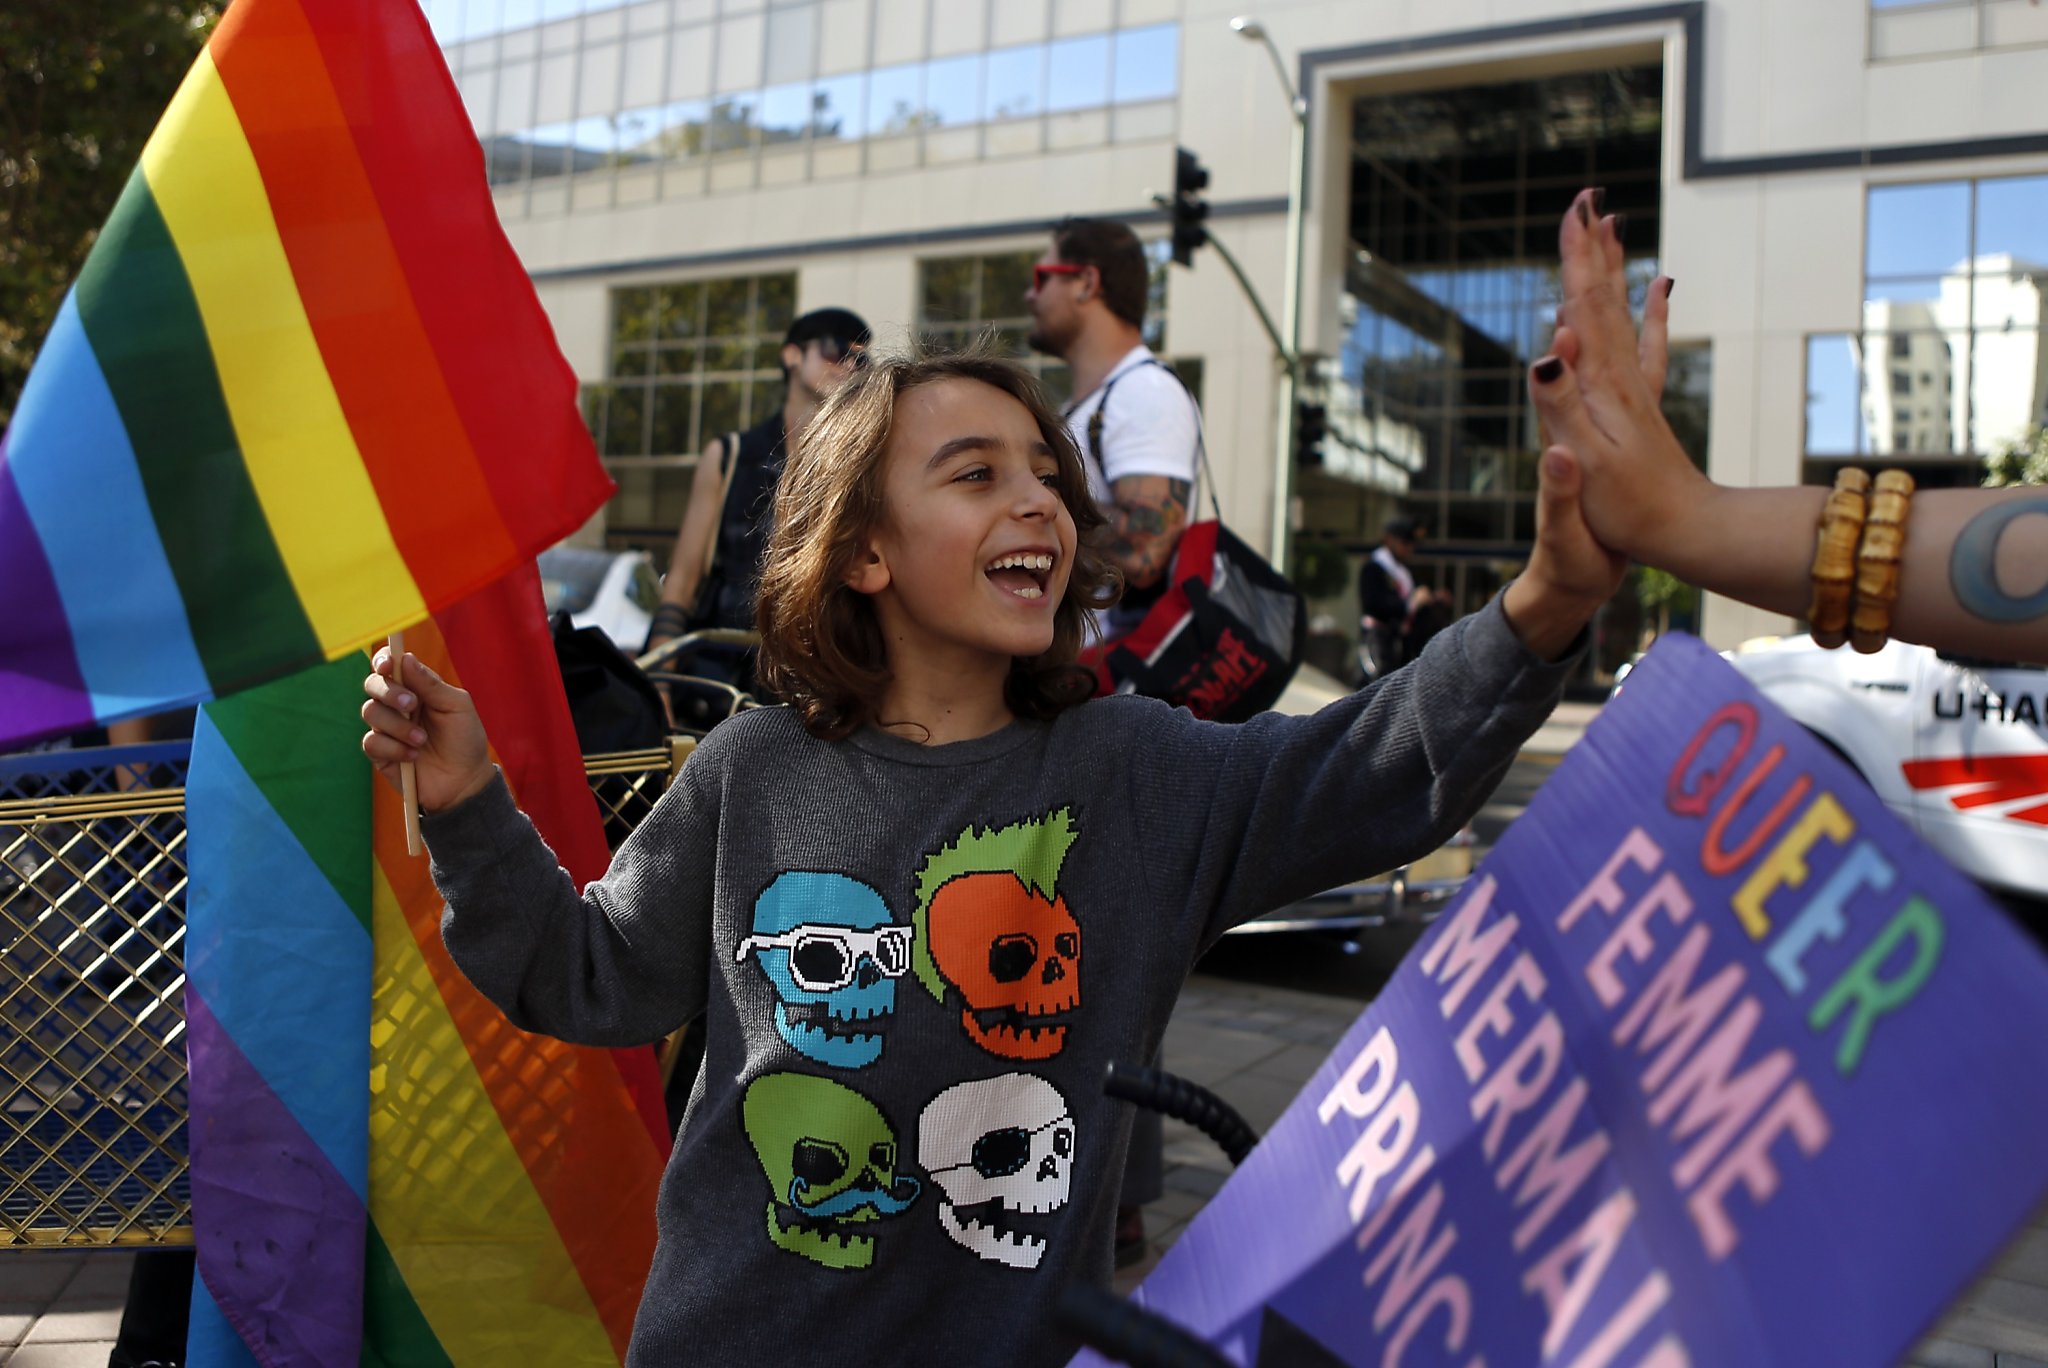 Oakland takes pride in familyfriendly gay parade